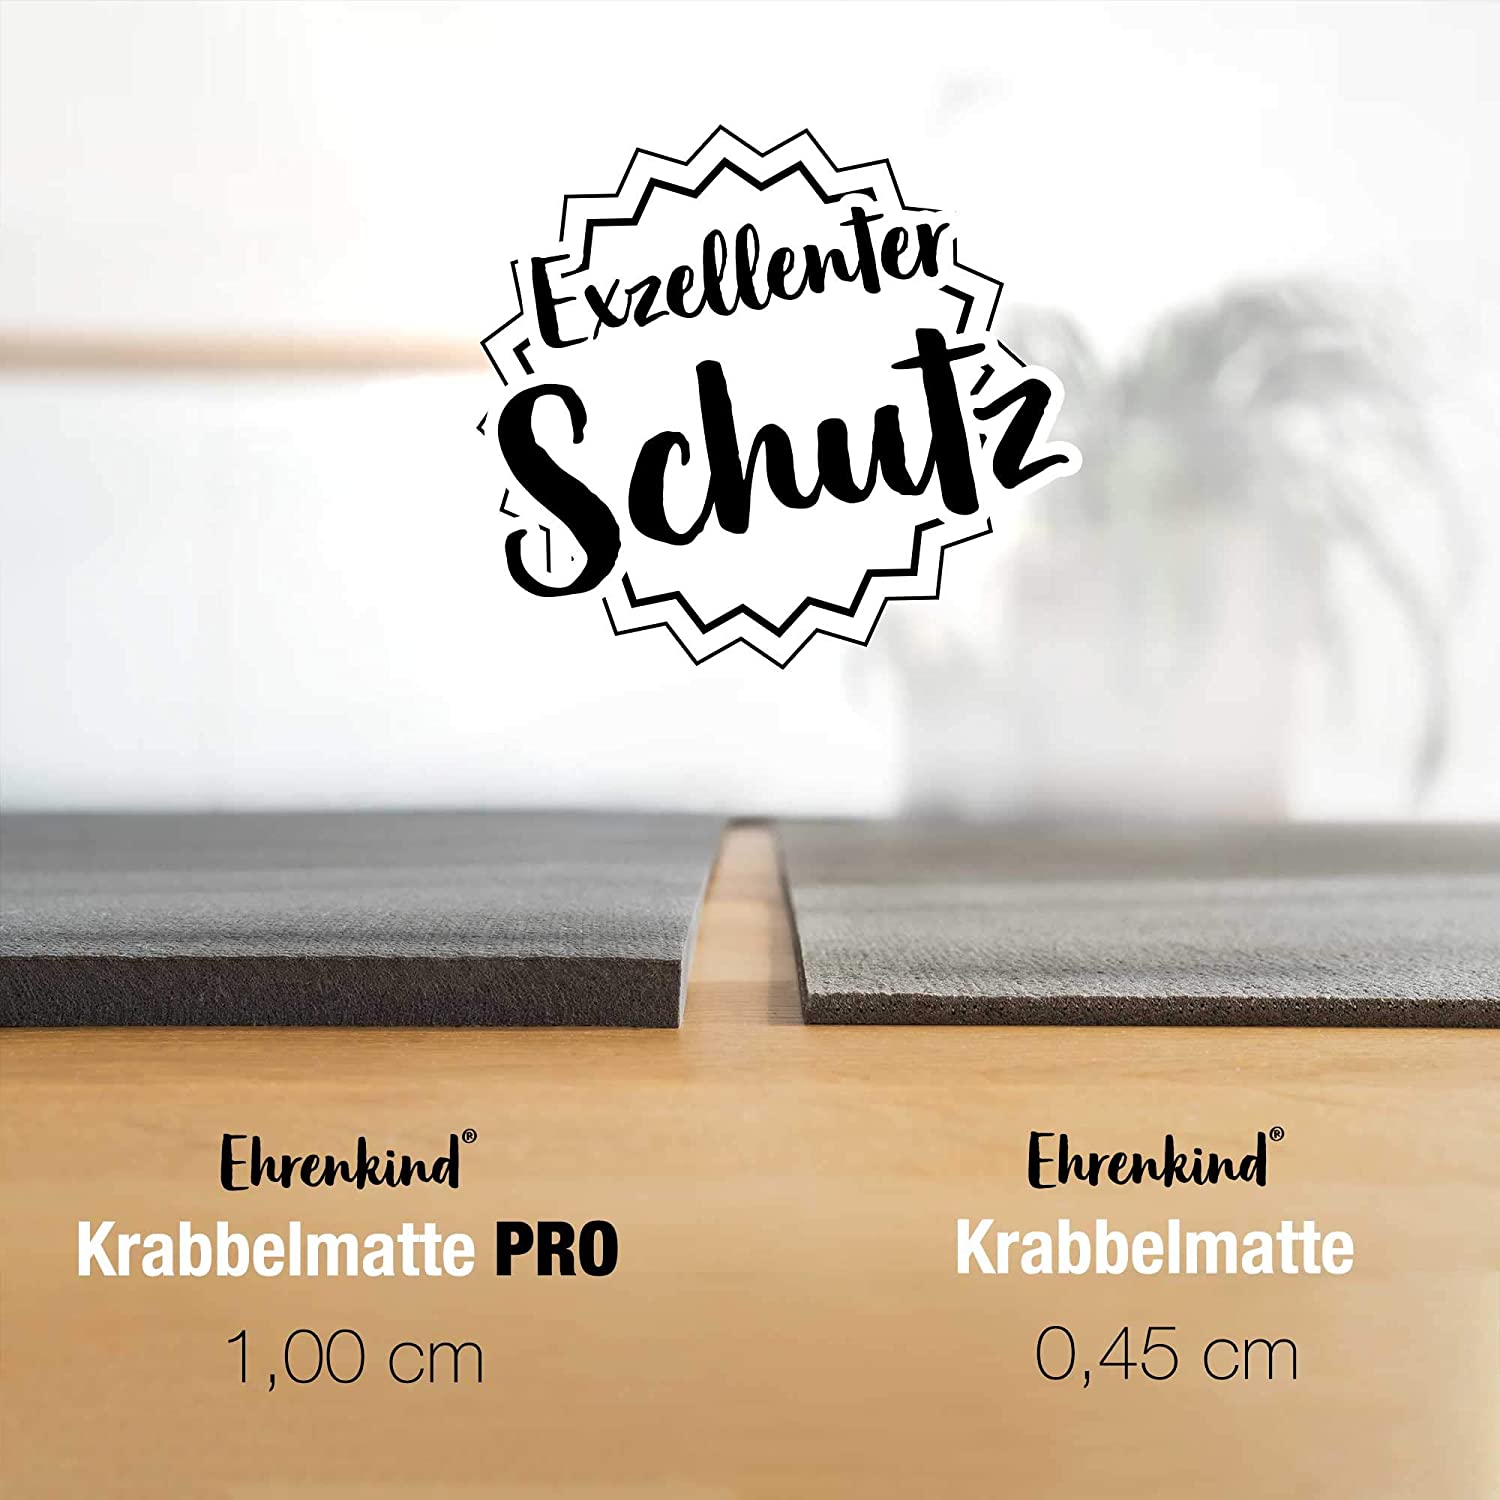 Ehrenkind® made in Germany non-slip crawling mat, Oeko-Tex mats sizes S-XL